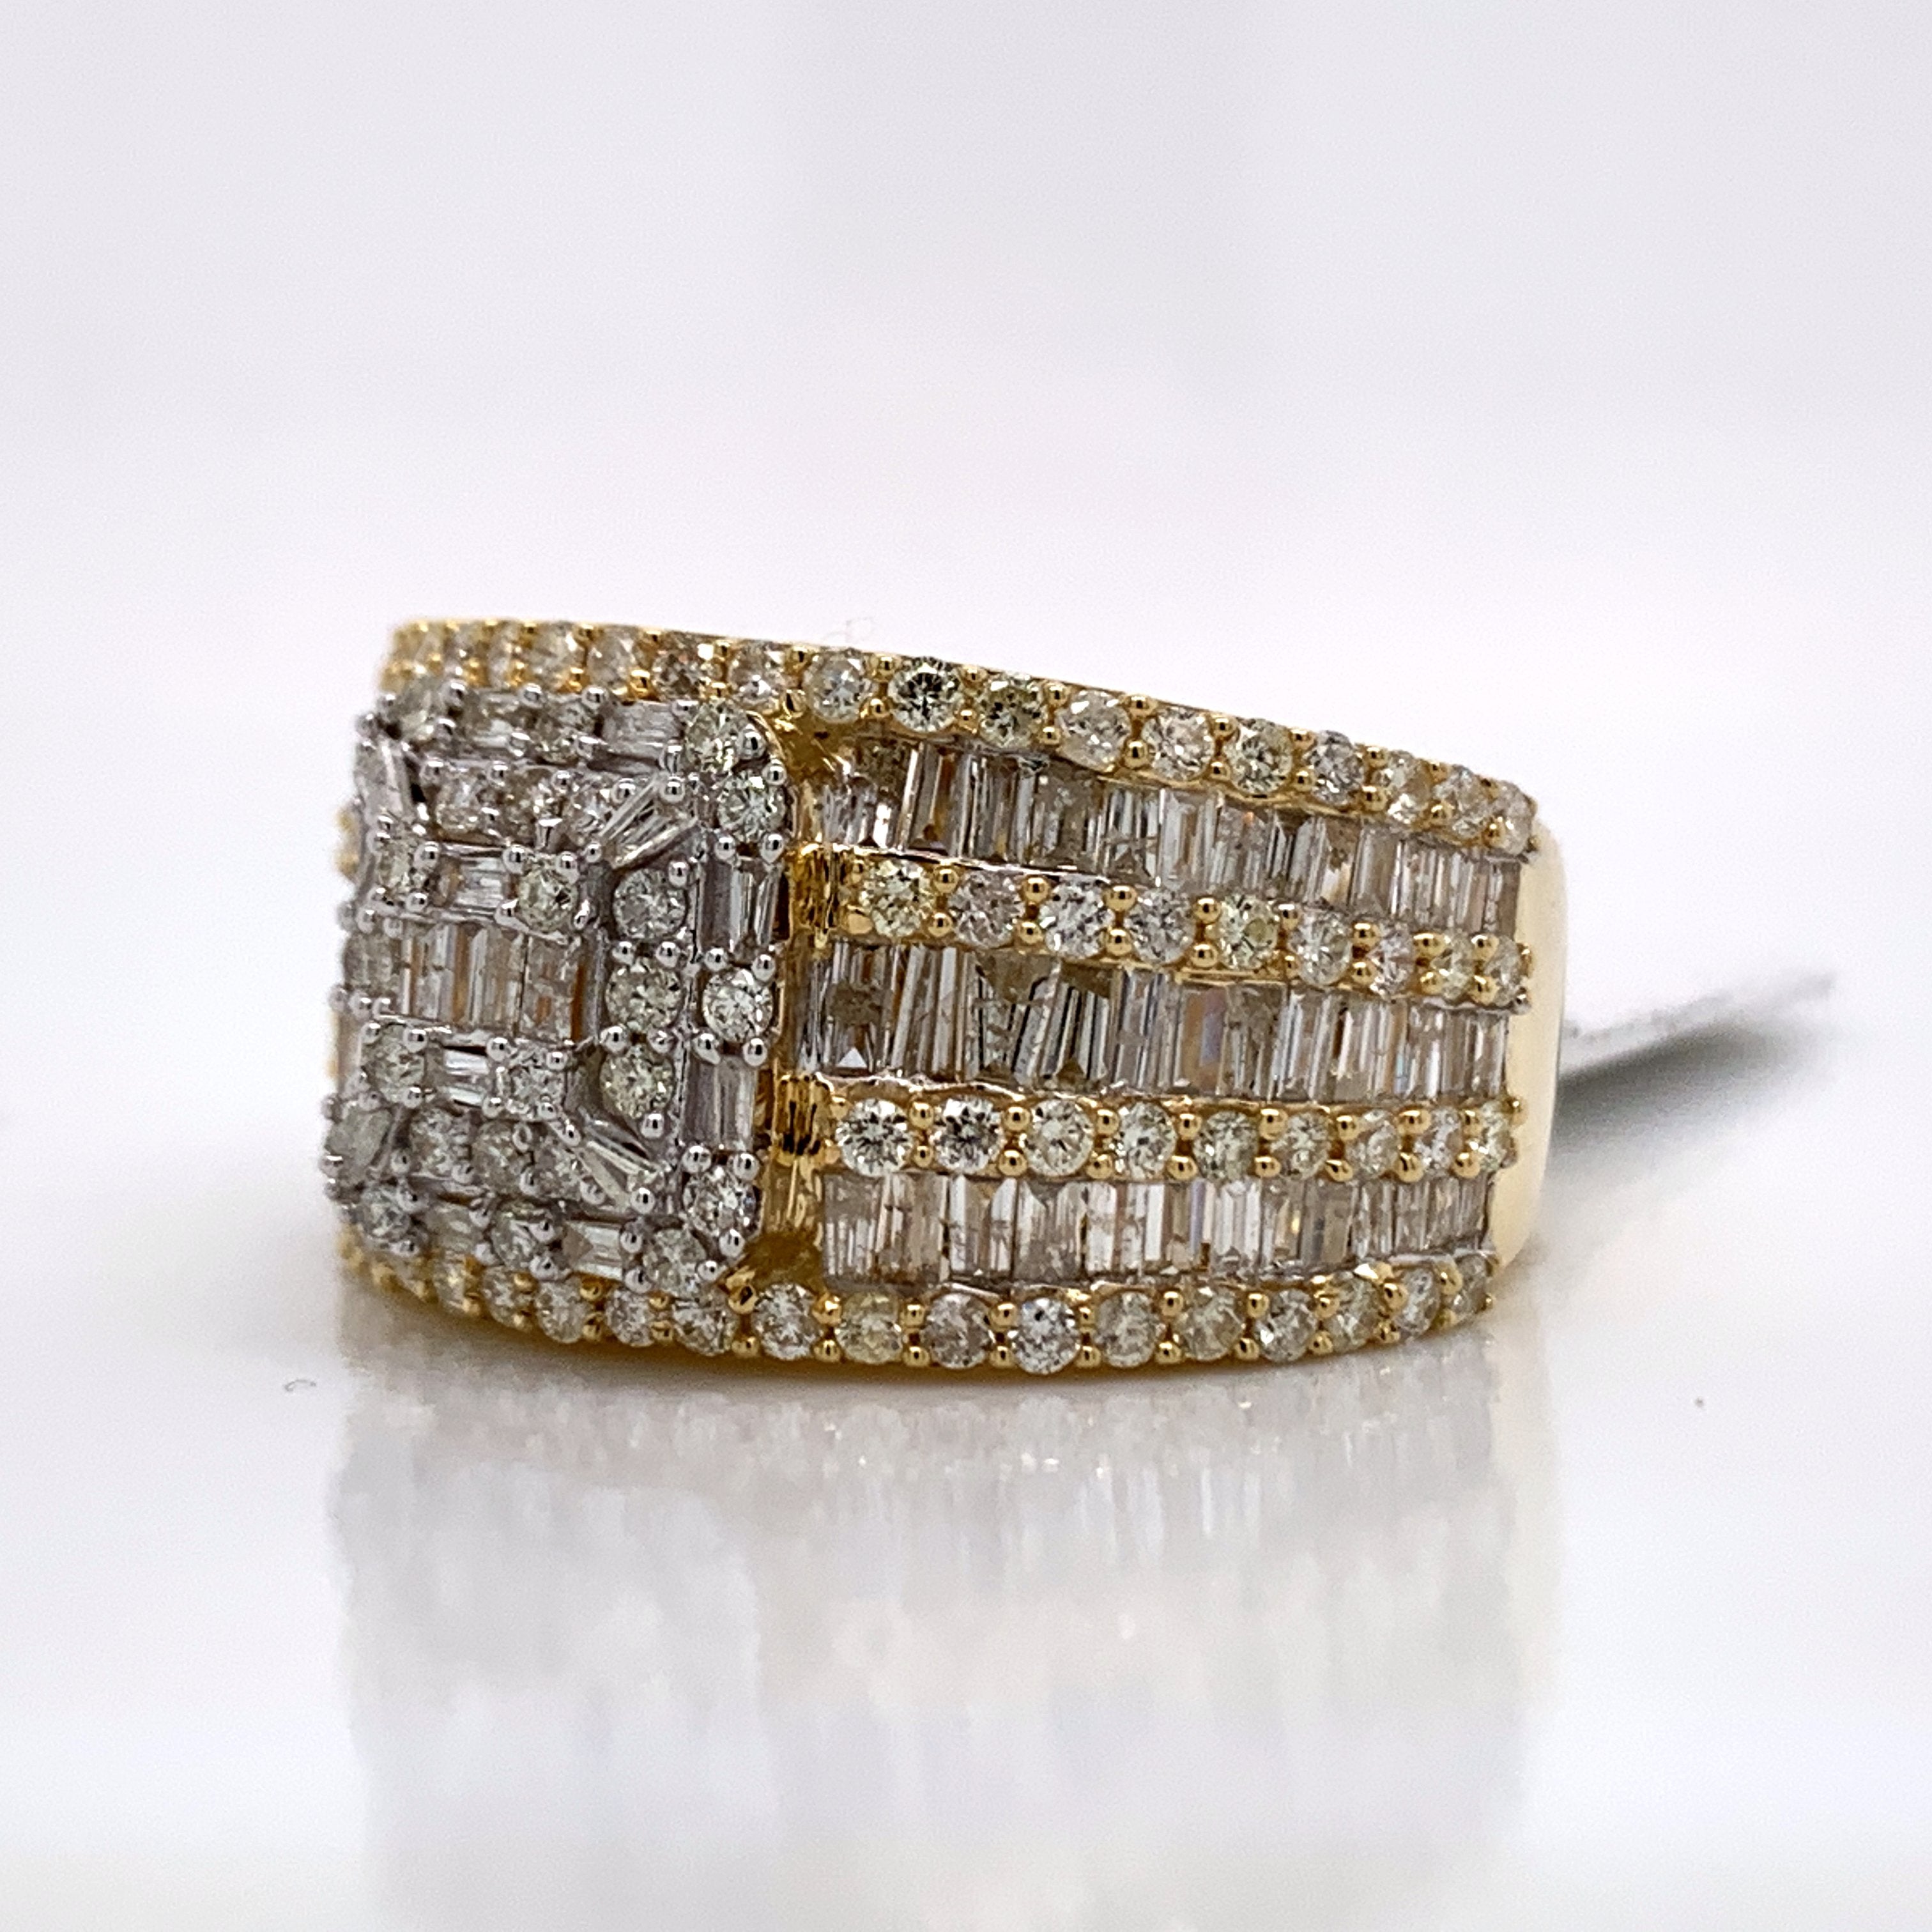 2.75CT Diamond 10K Gold Ring - White Carat Diamonds 